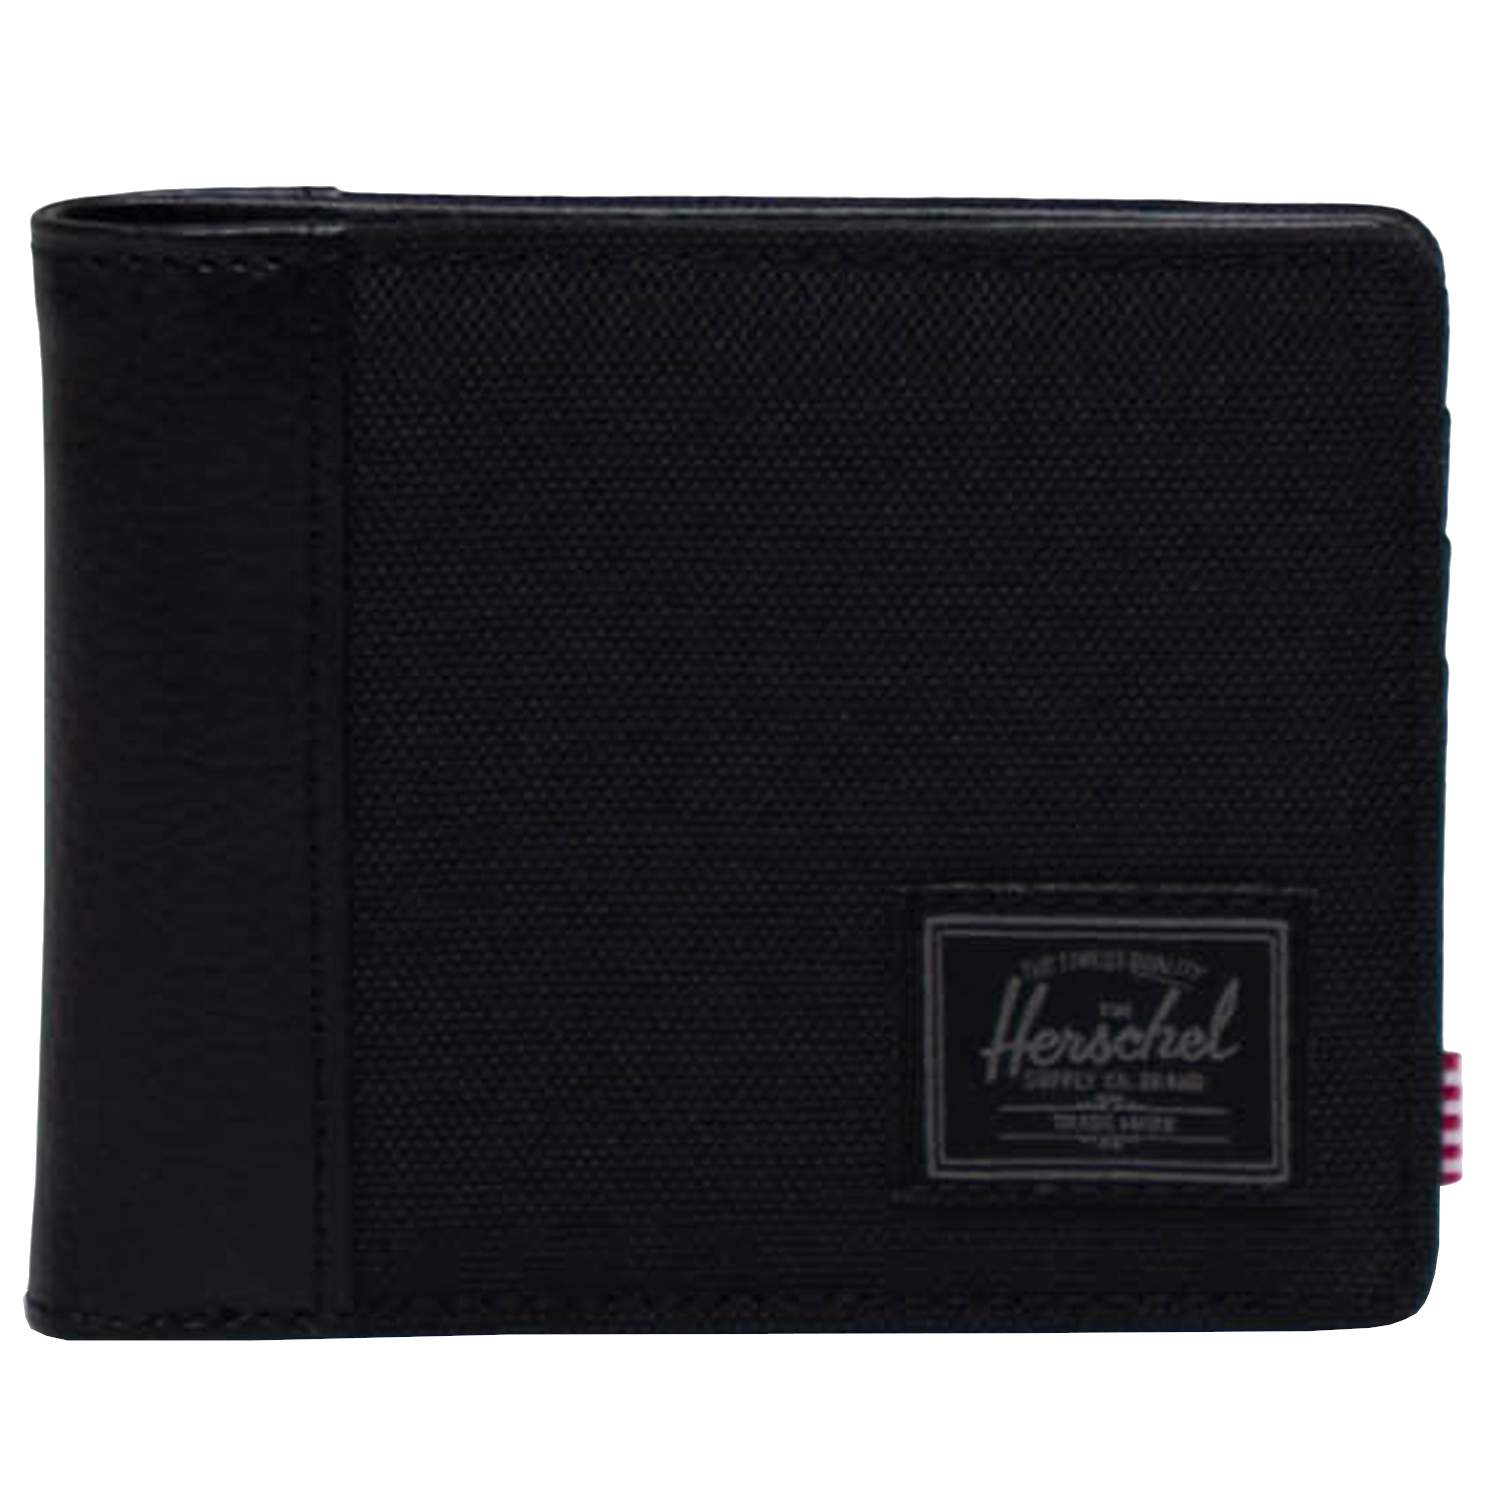 Кошелек Herschel Herschel Hank RFID Wallet, черный кошелек herschel herschel oscar wallet черный